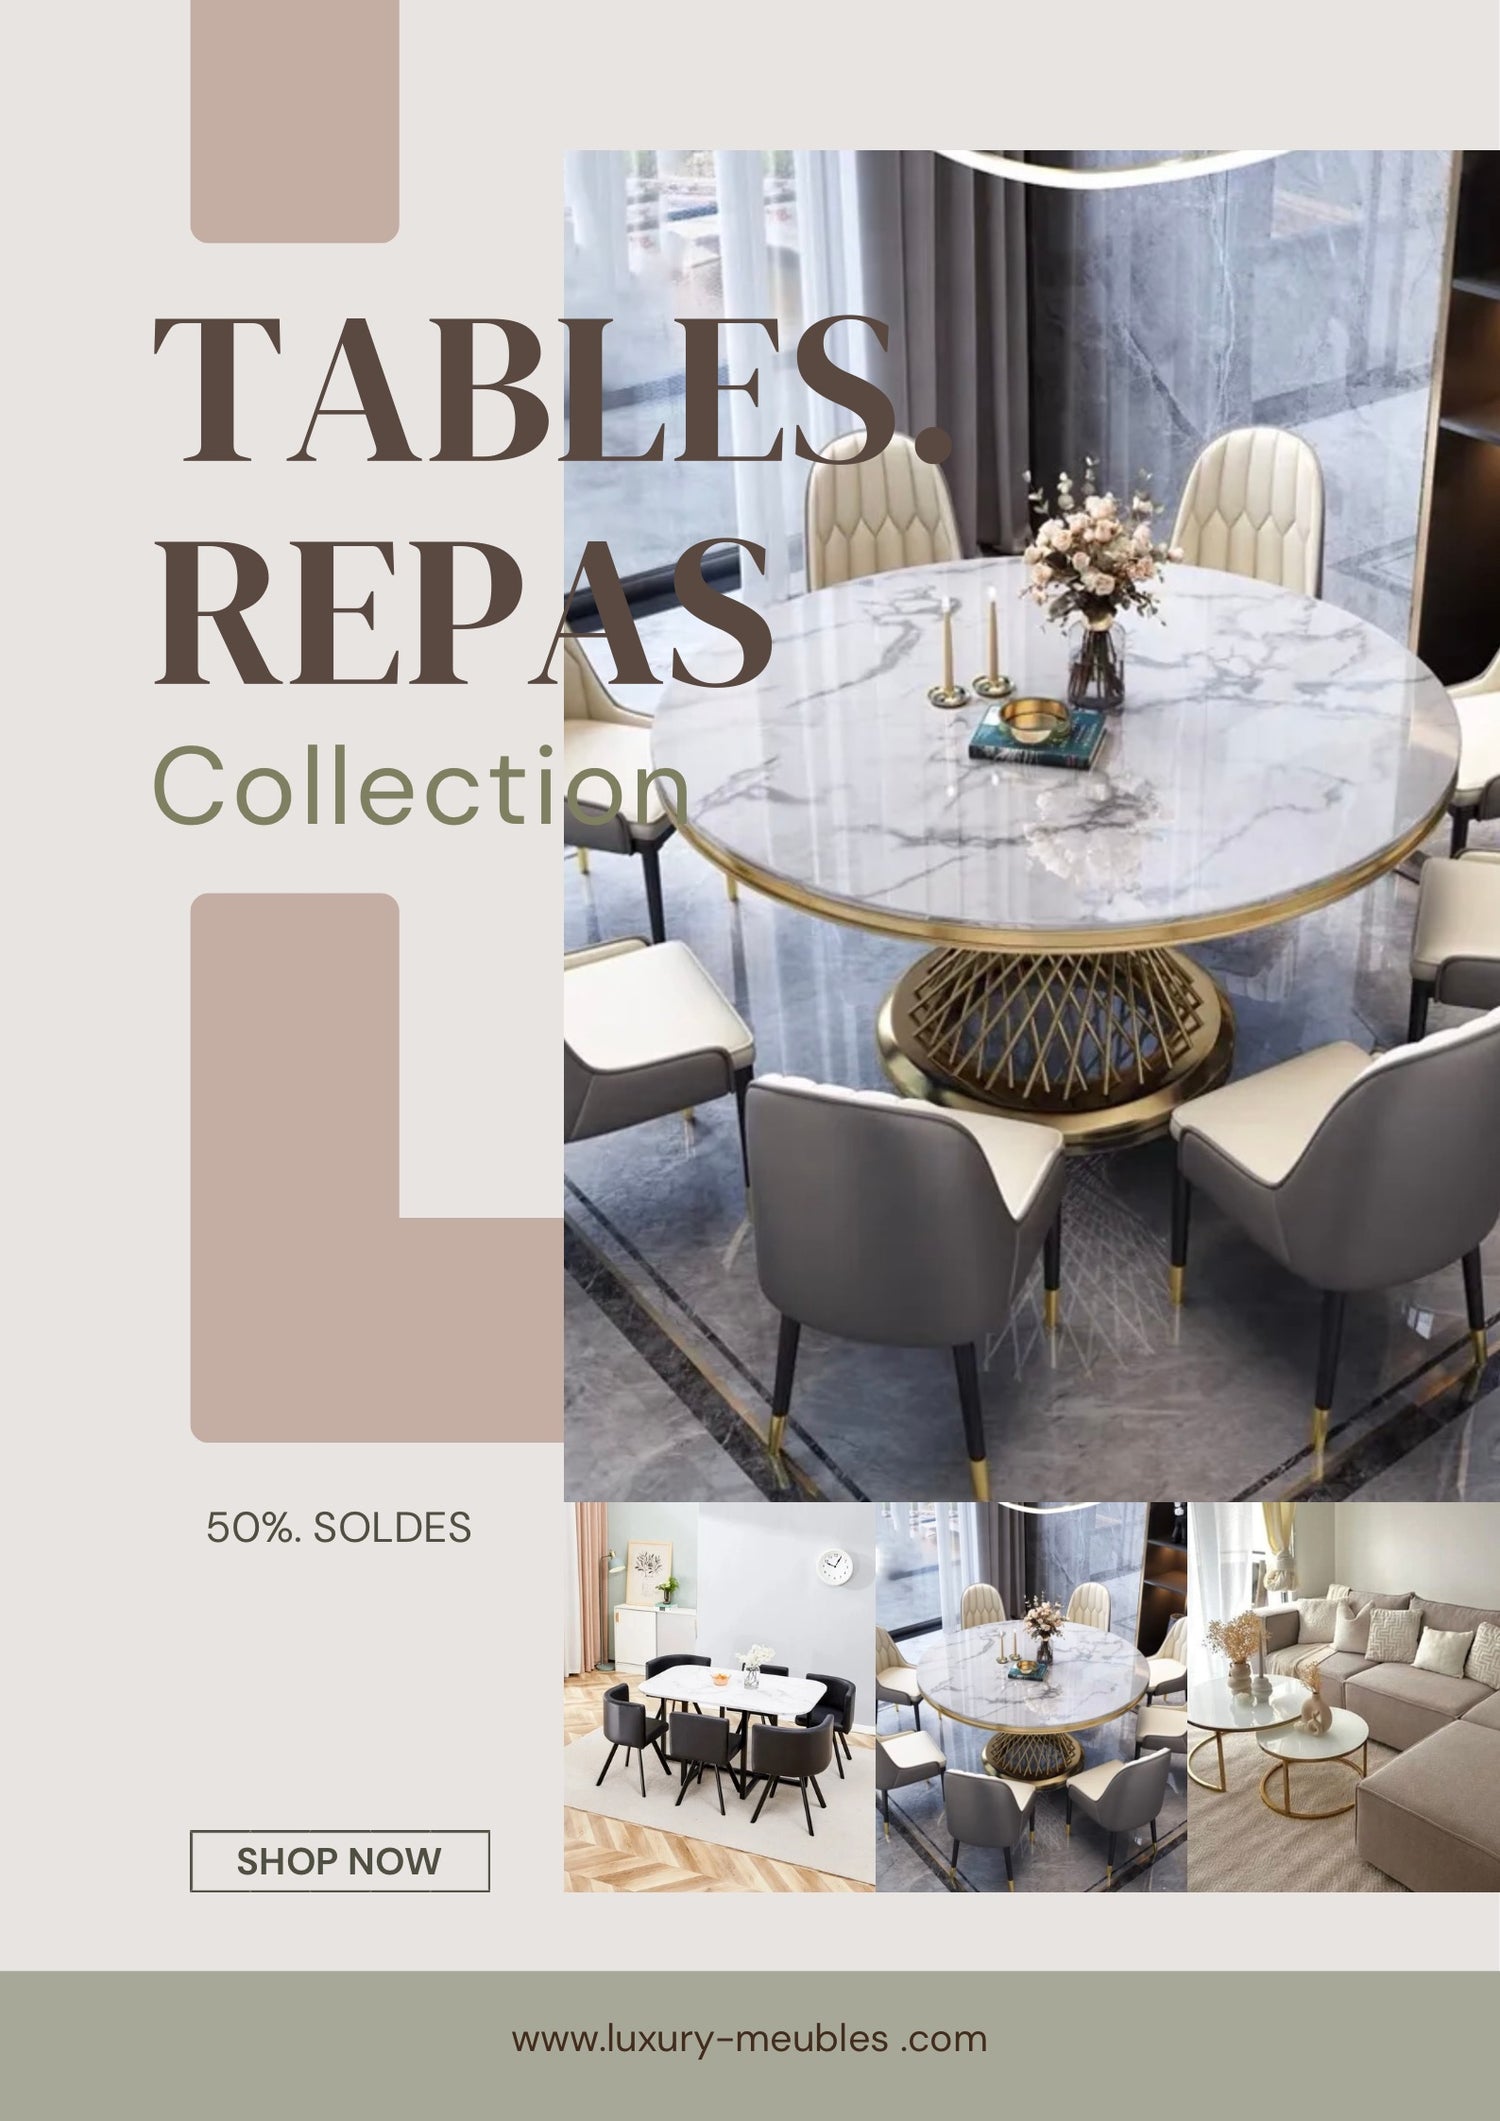 TABLES REPAS